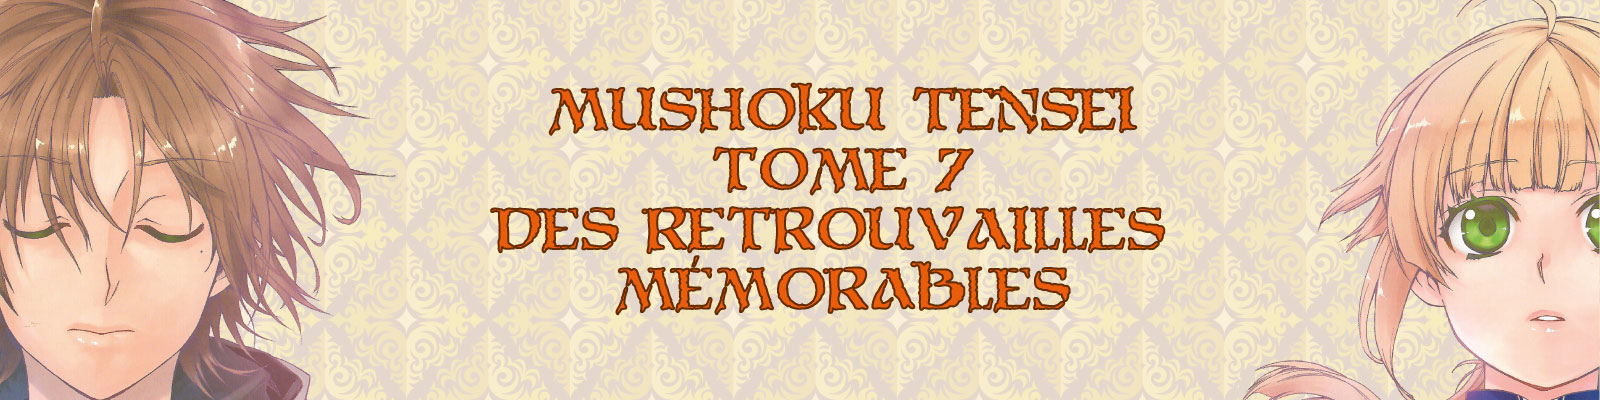 Mushoku Tensei T7